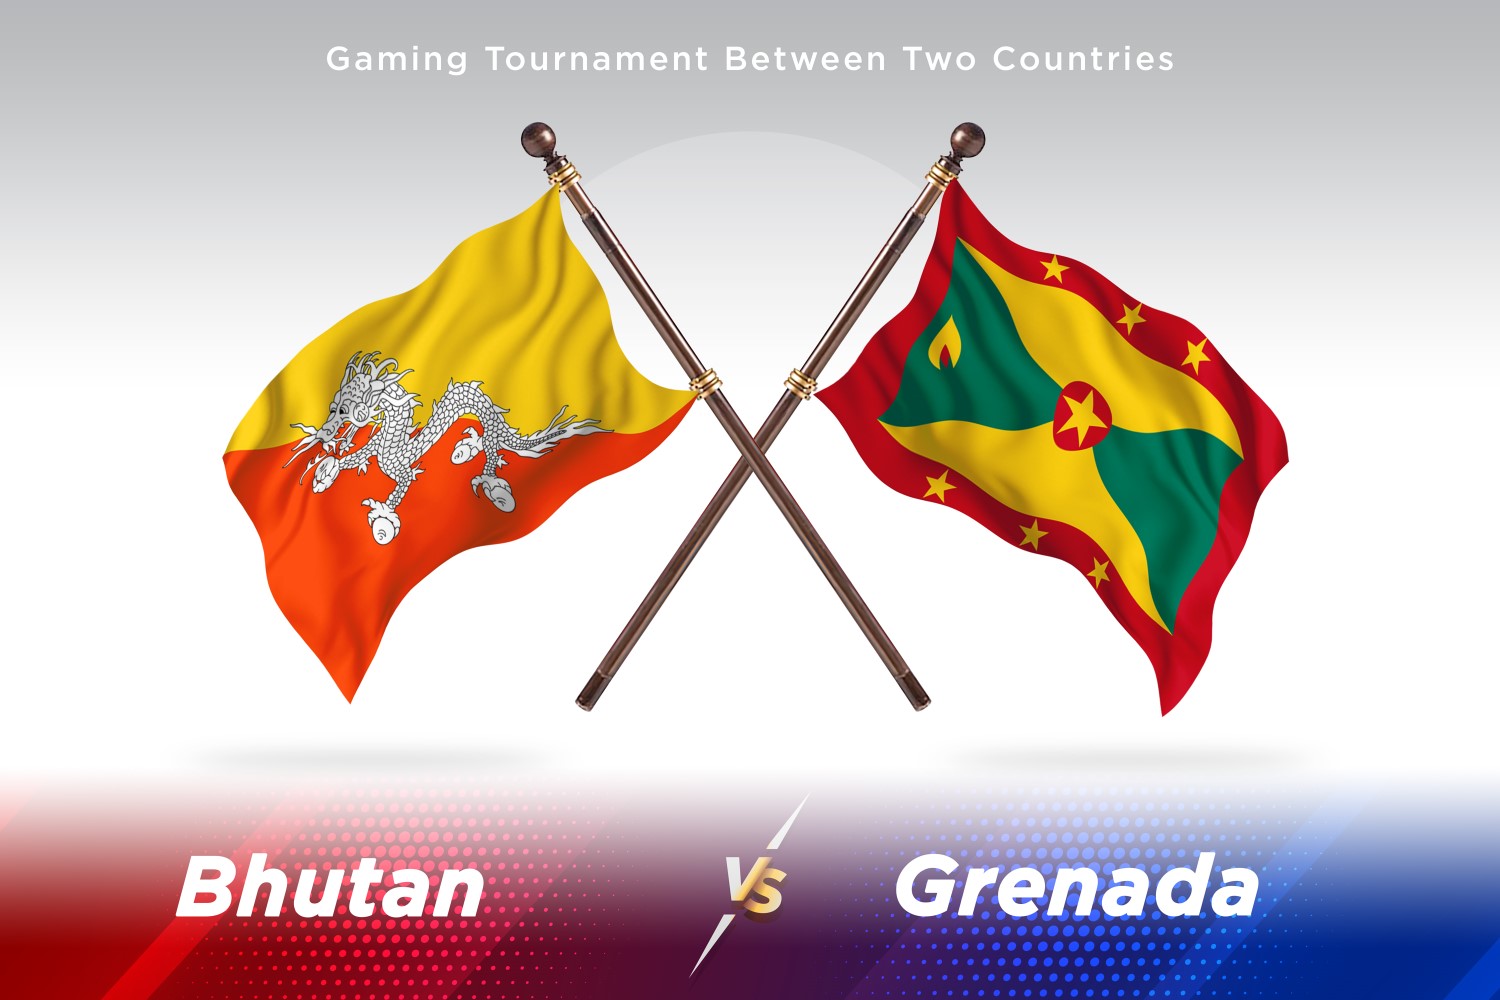 Bhutan versus grenada Two Flags